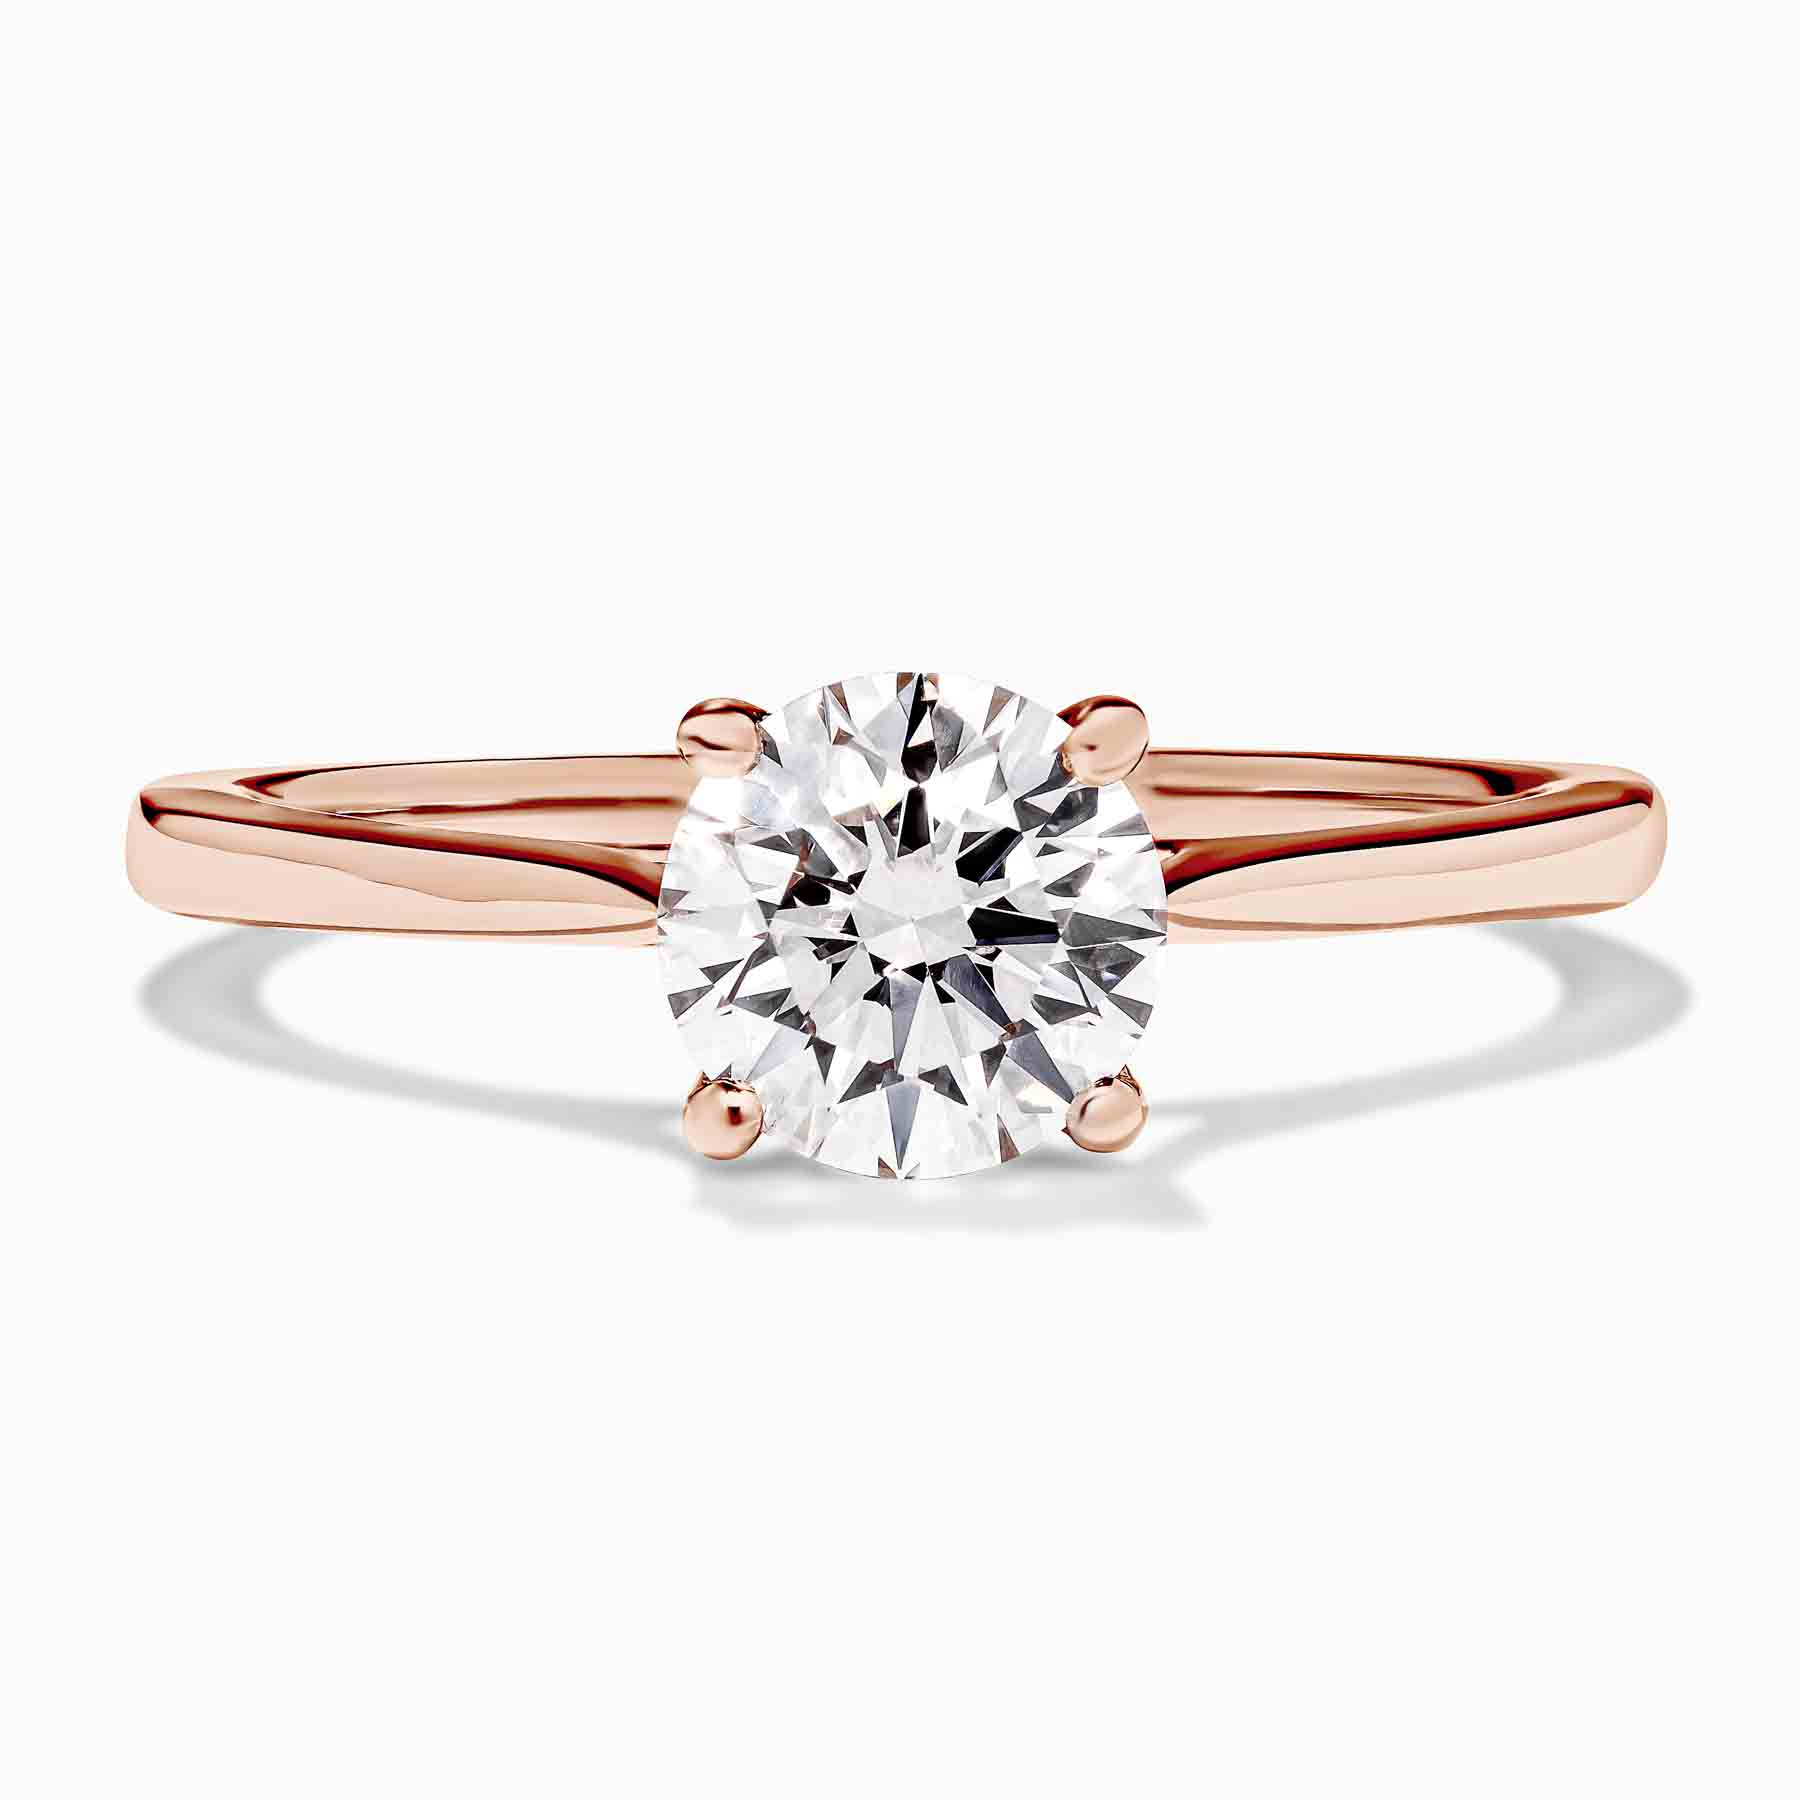 MiaDonna's Blonde Solitaire Engagement Ring